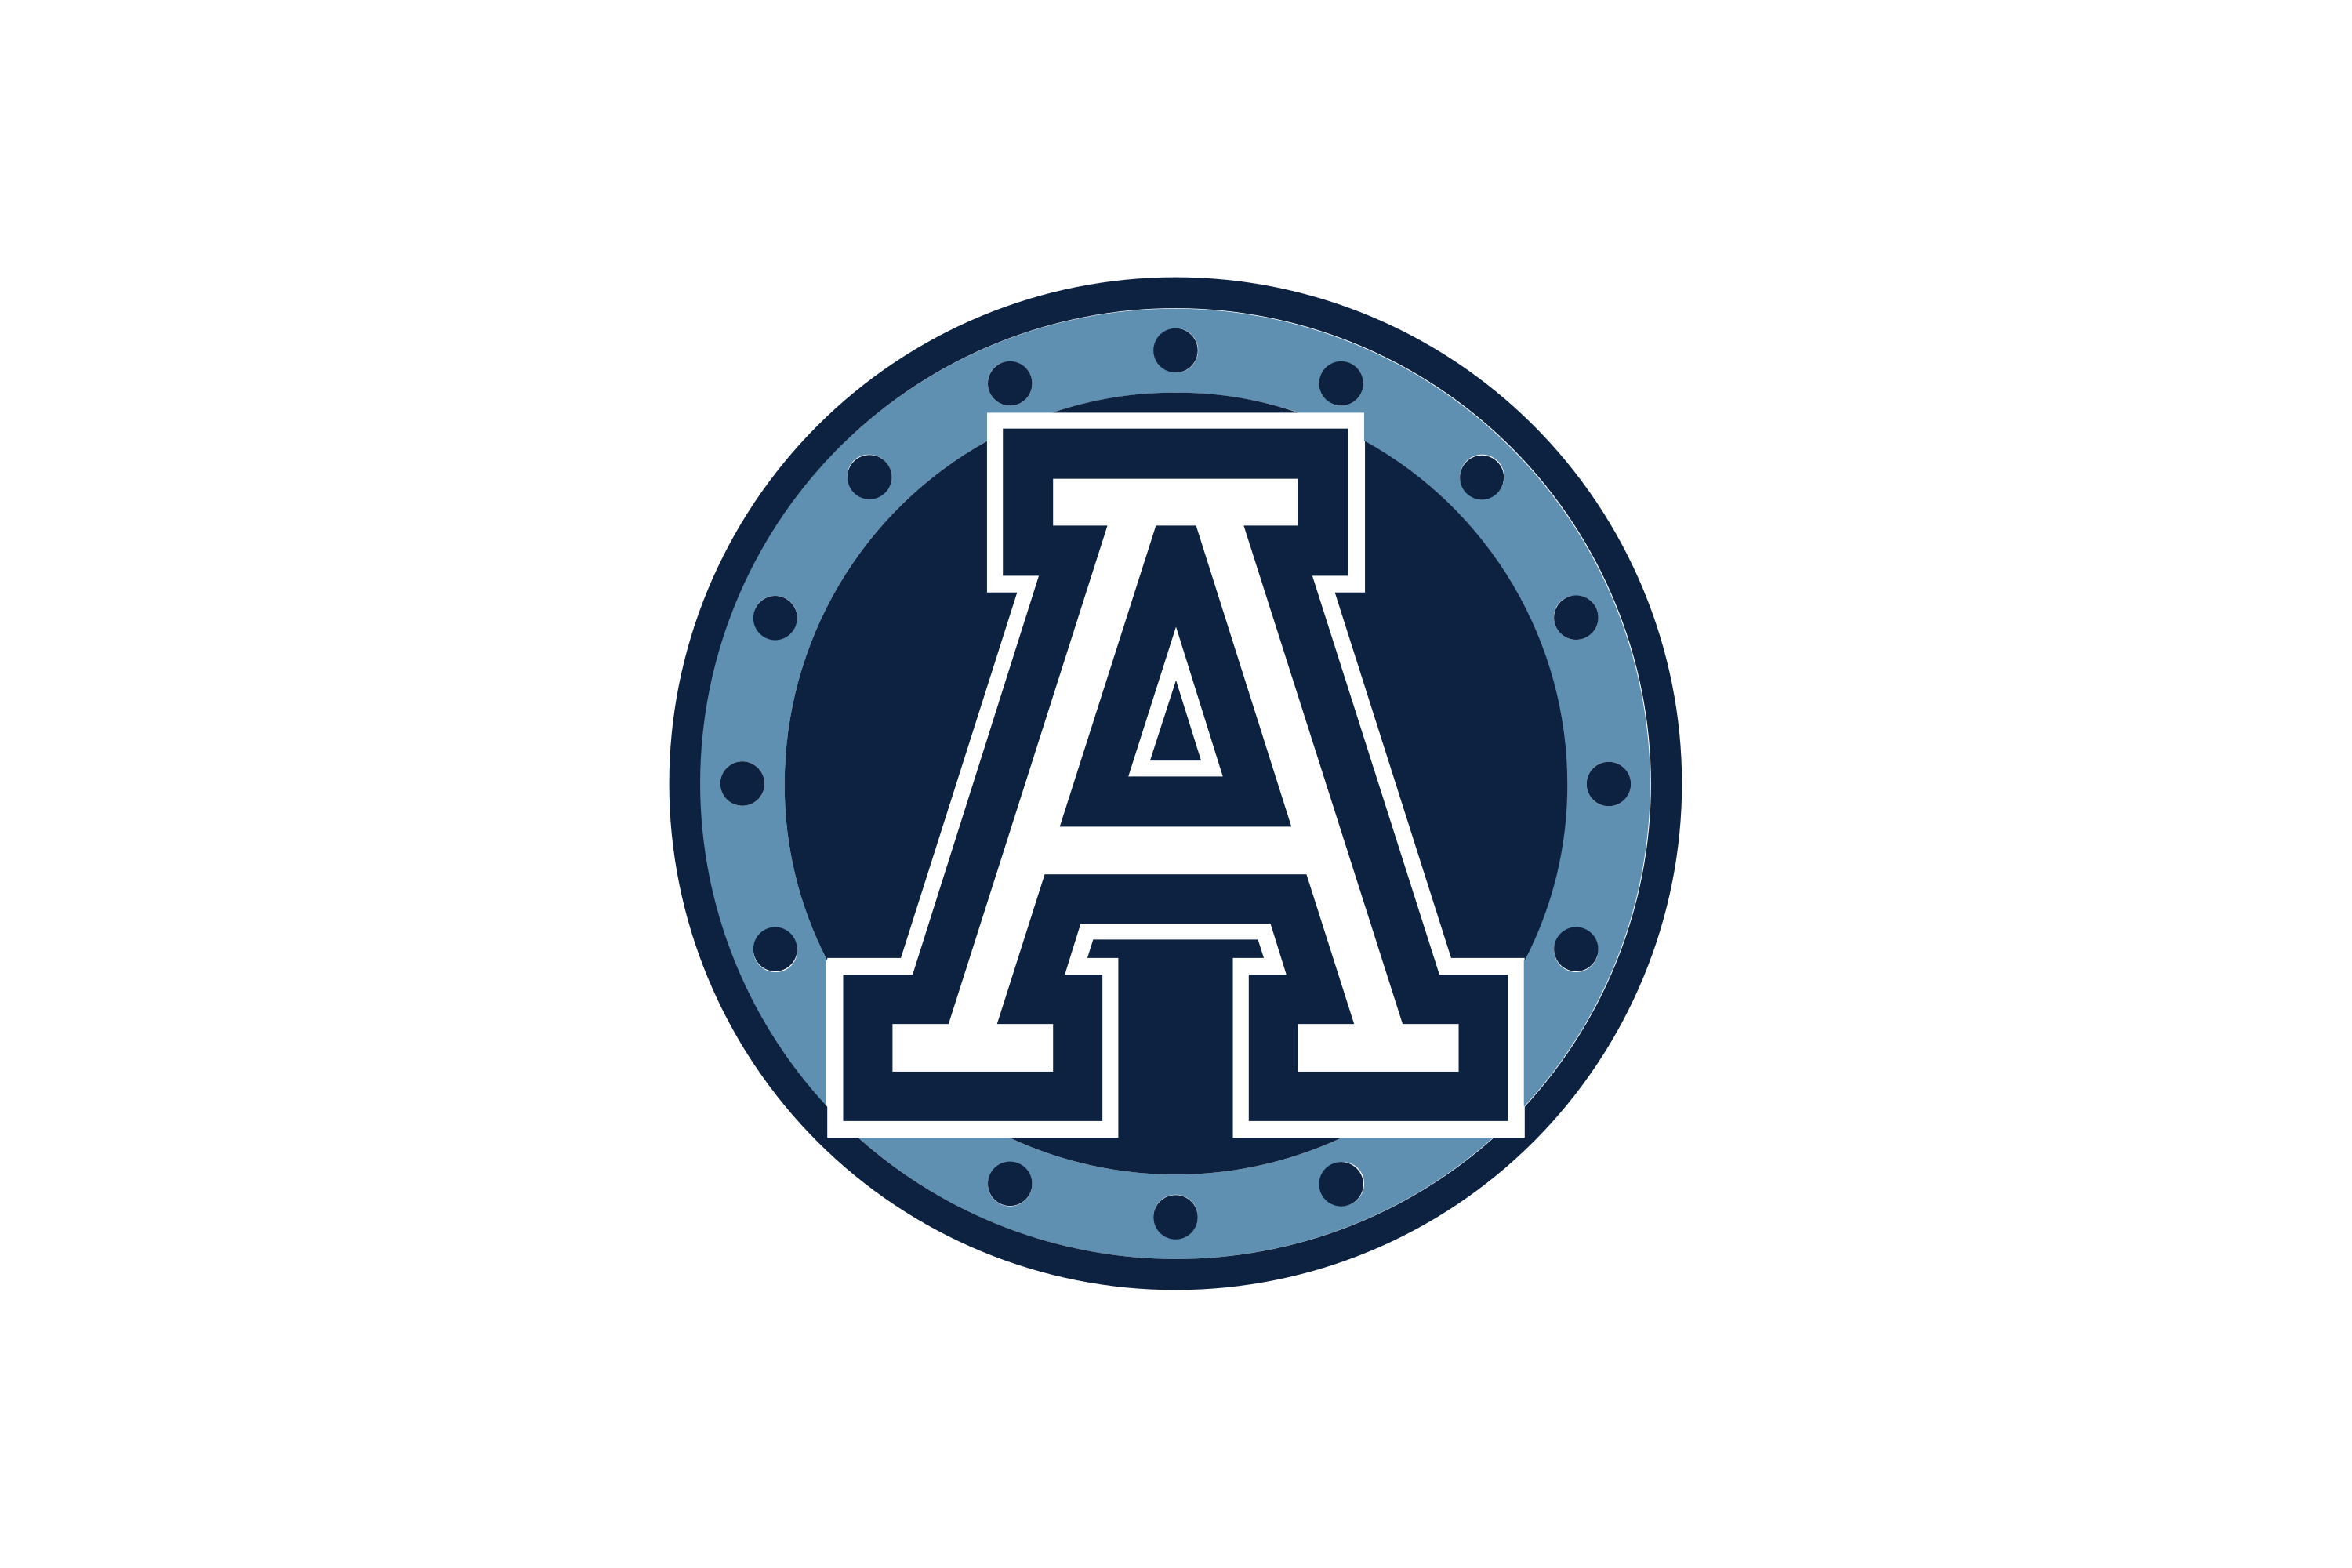 Download Toronto Argonauts (Toronto Argonaut Football Club) Logo in SVG